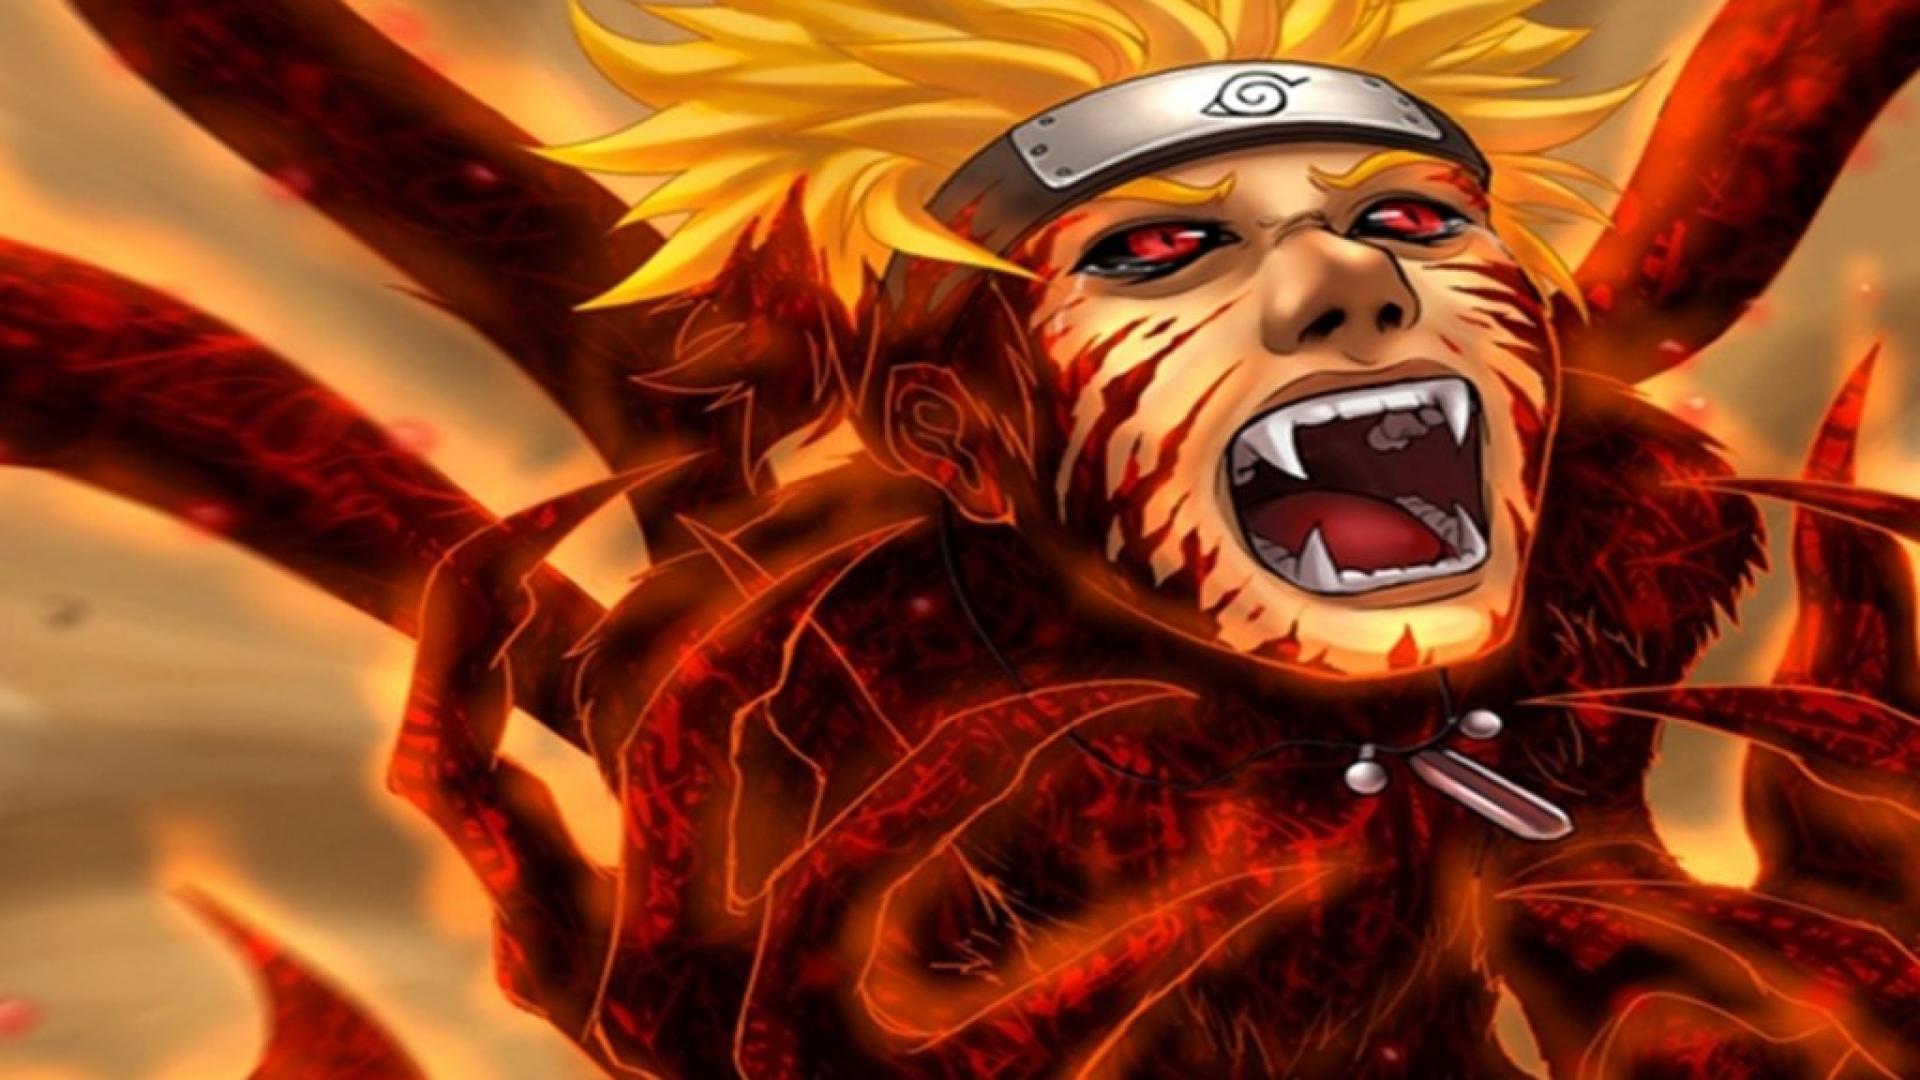 Naruto Wallpaper Hd Free Download gambar ke 16